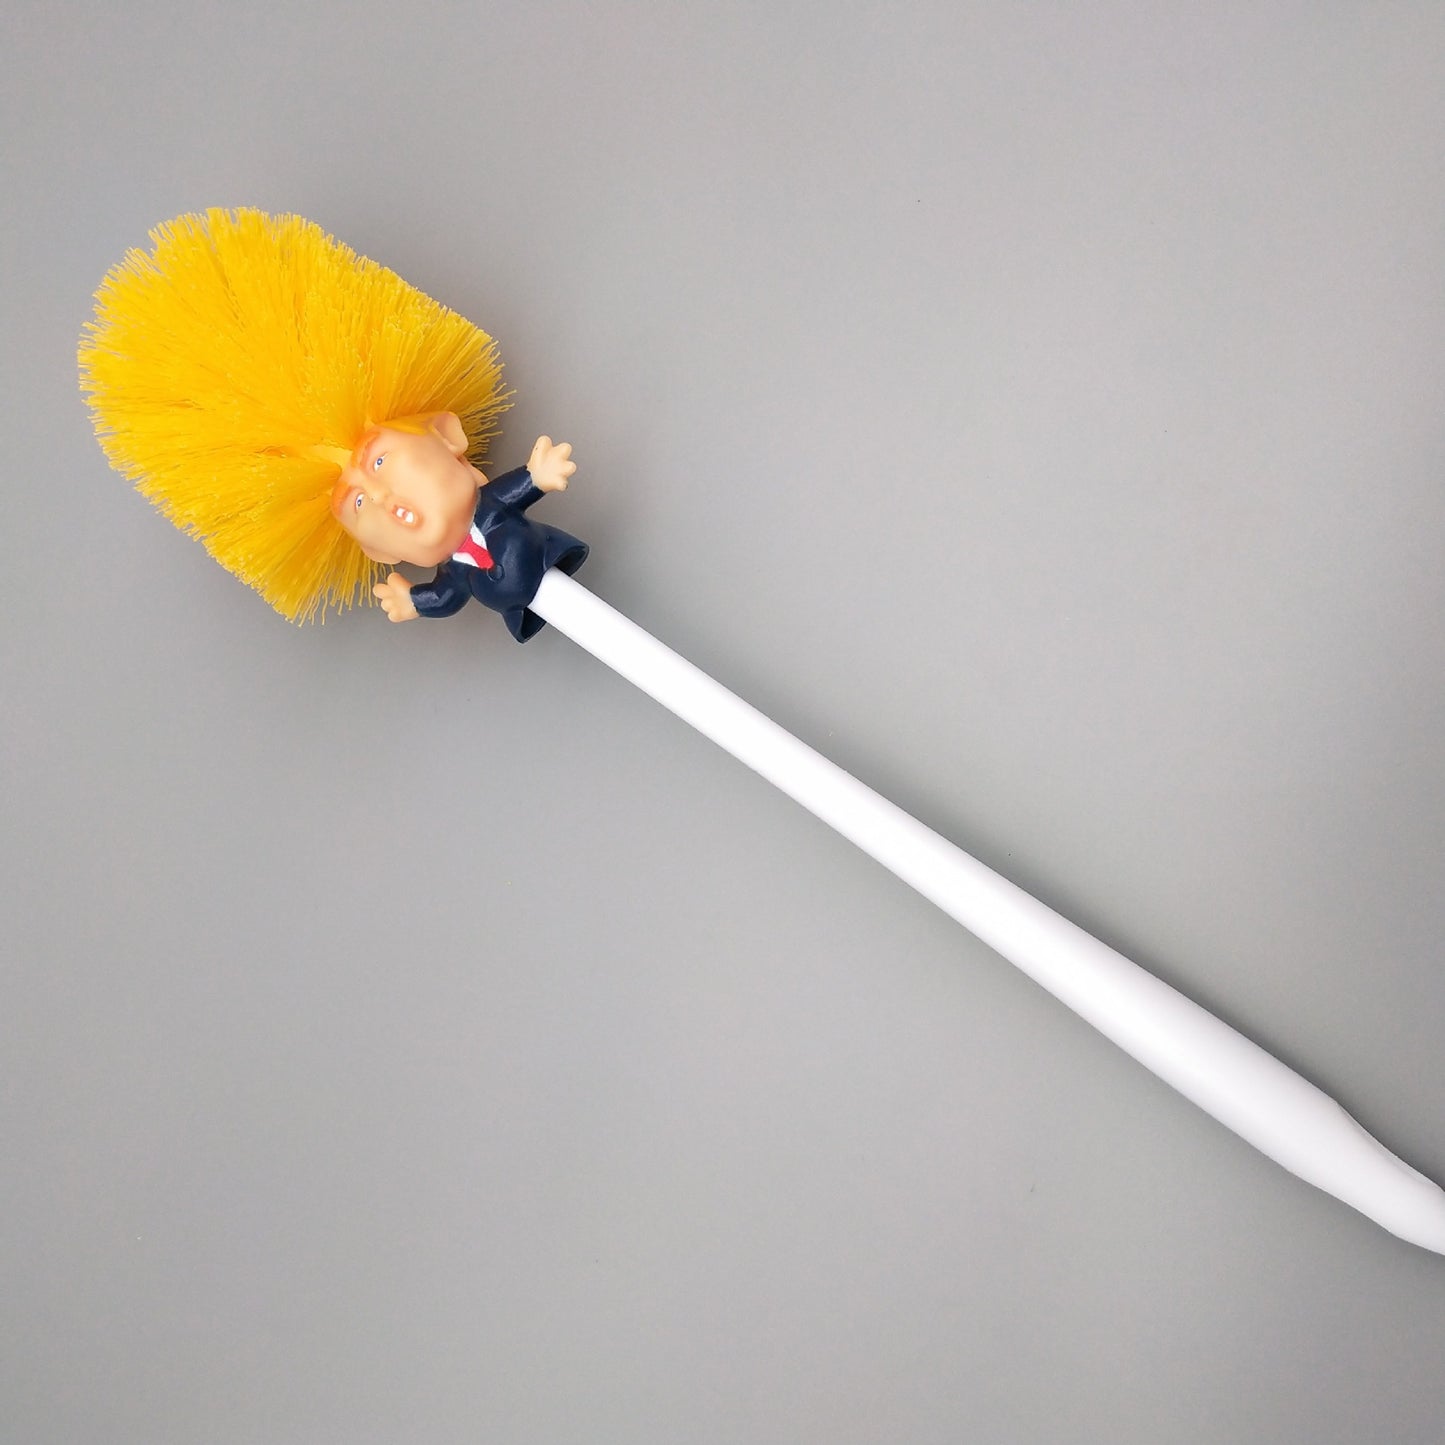 U.S. President Trump Biden Toilet Brush Funny Gag Gift Hard-haired Toilet  Brush Gifts for Friends Household Cleaning Appliances